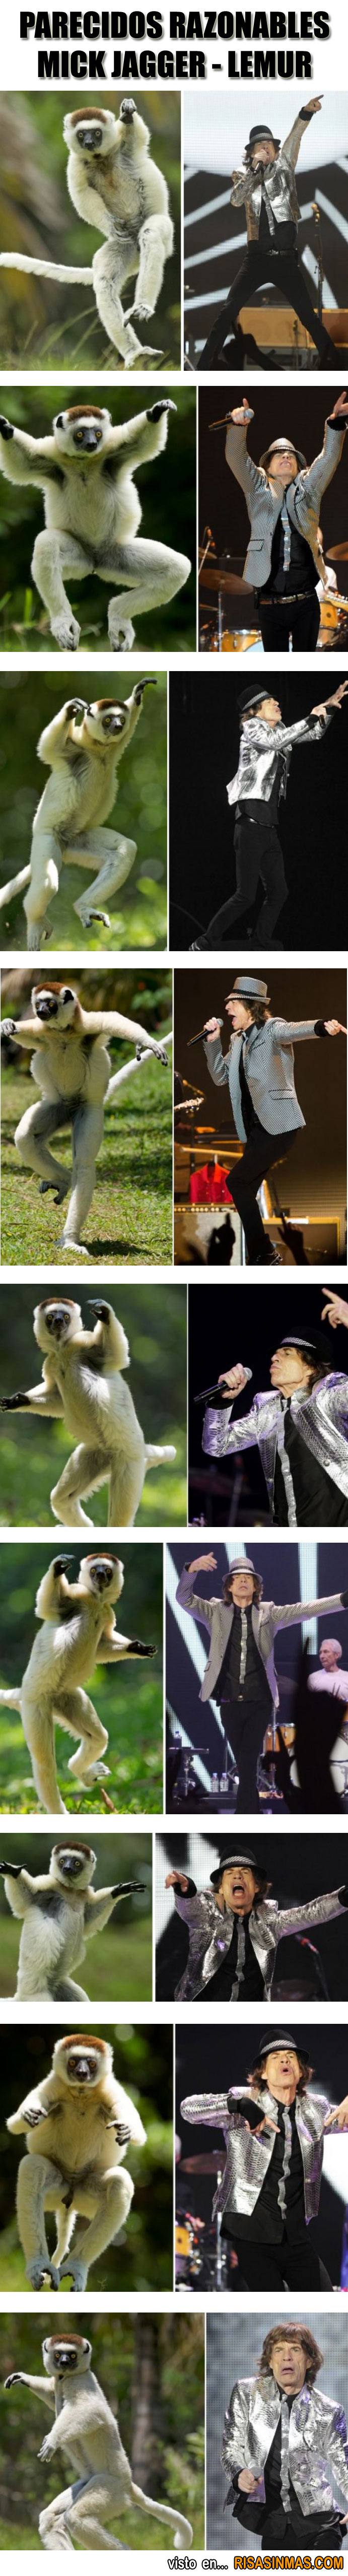 Parecidos razonables: Mick Jagger - Lemur